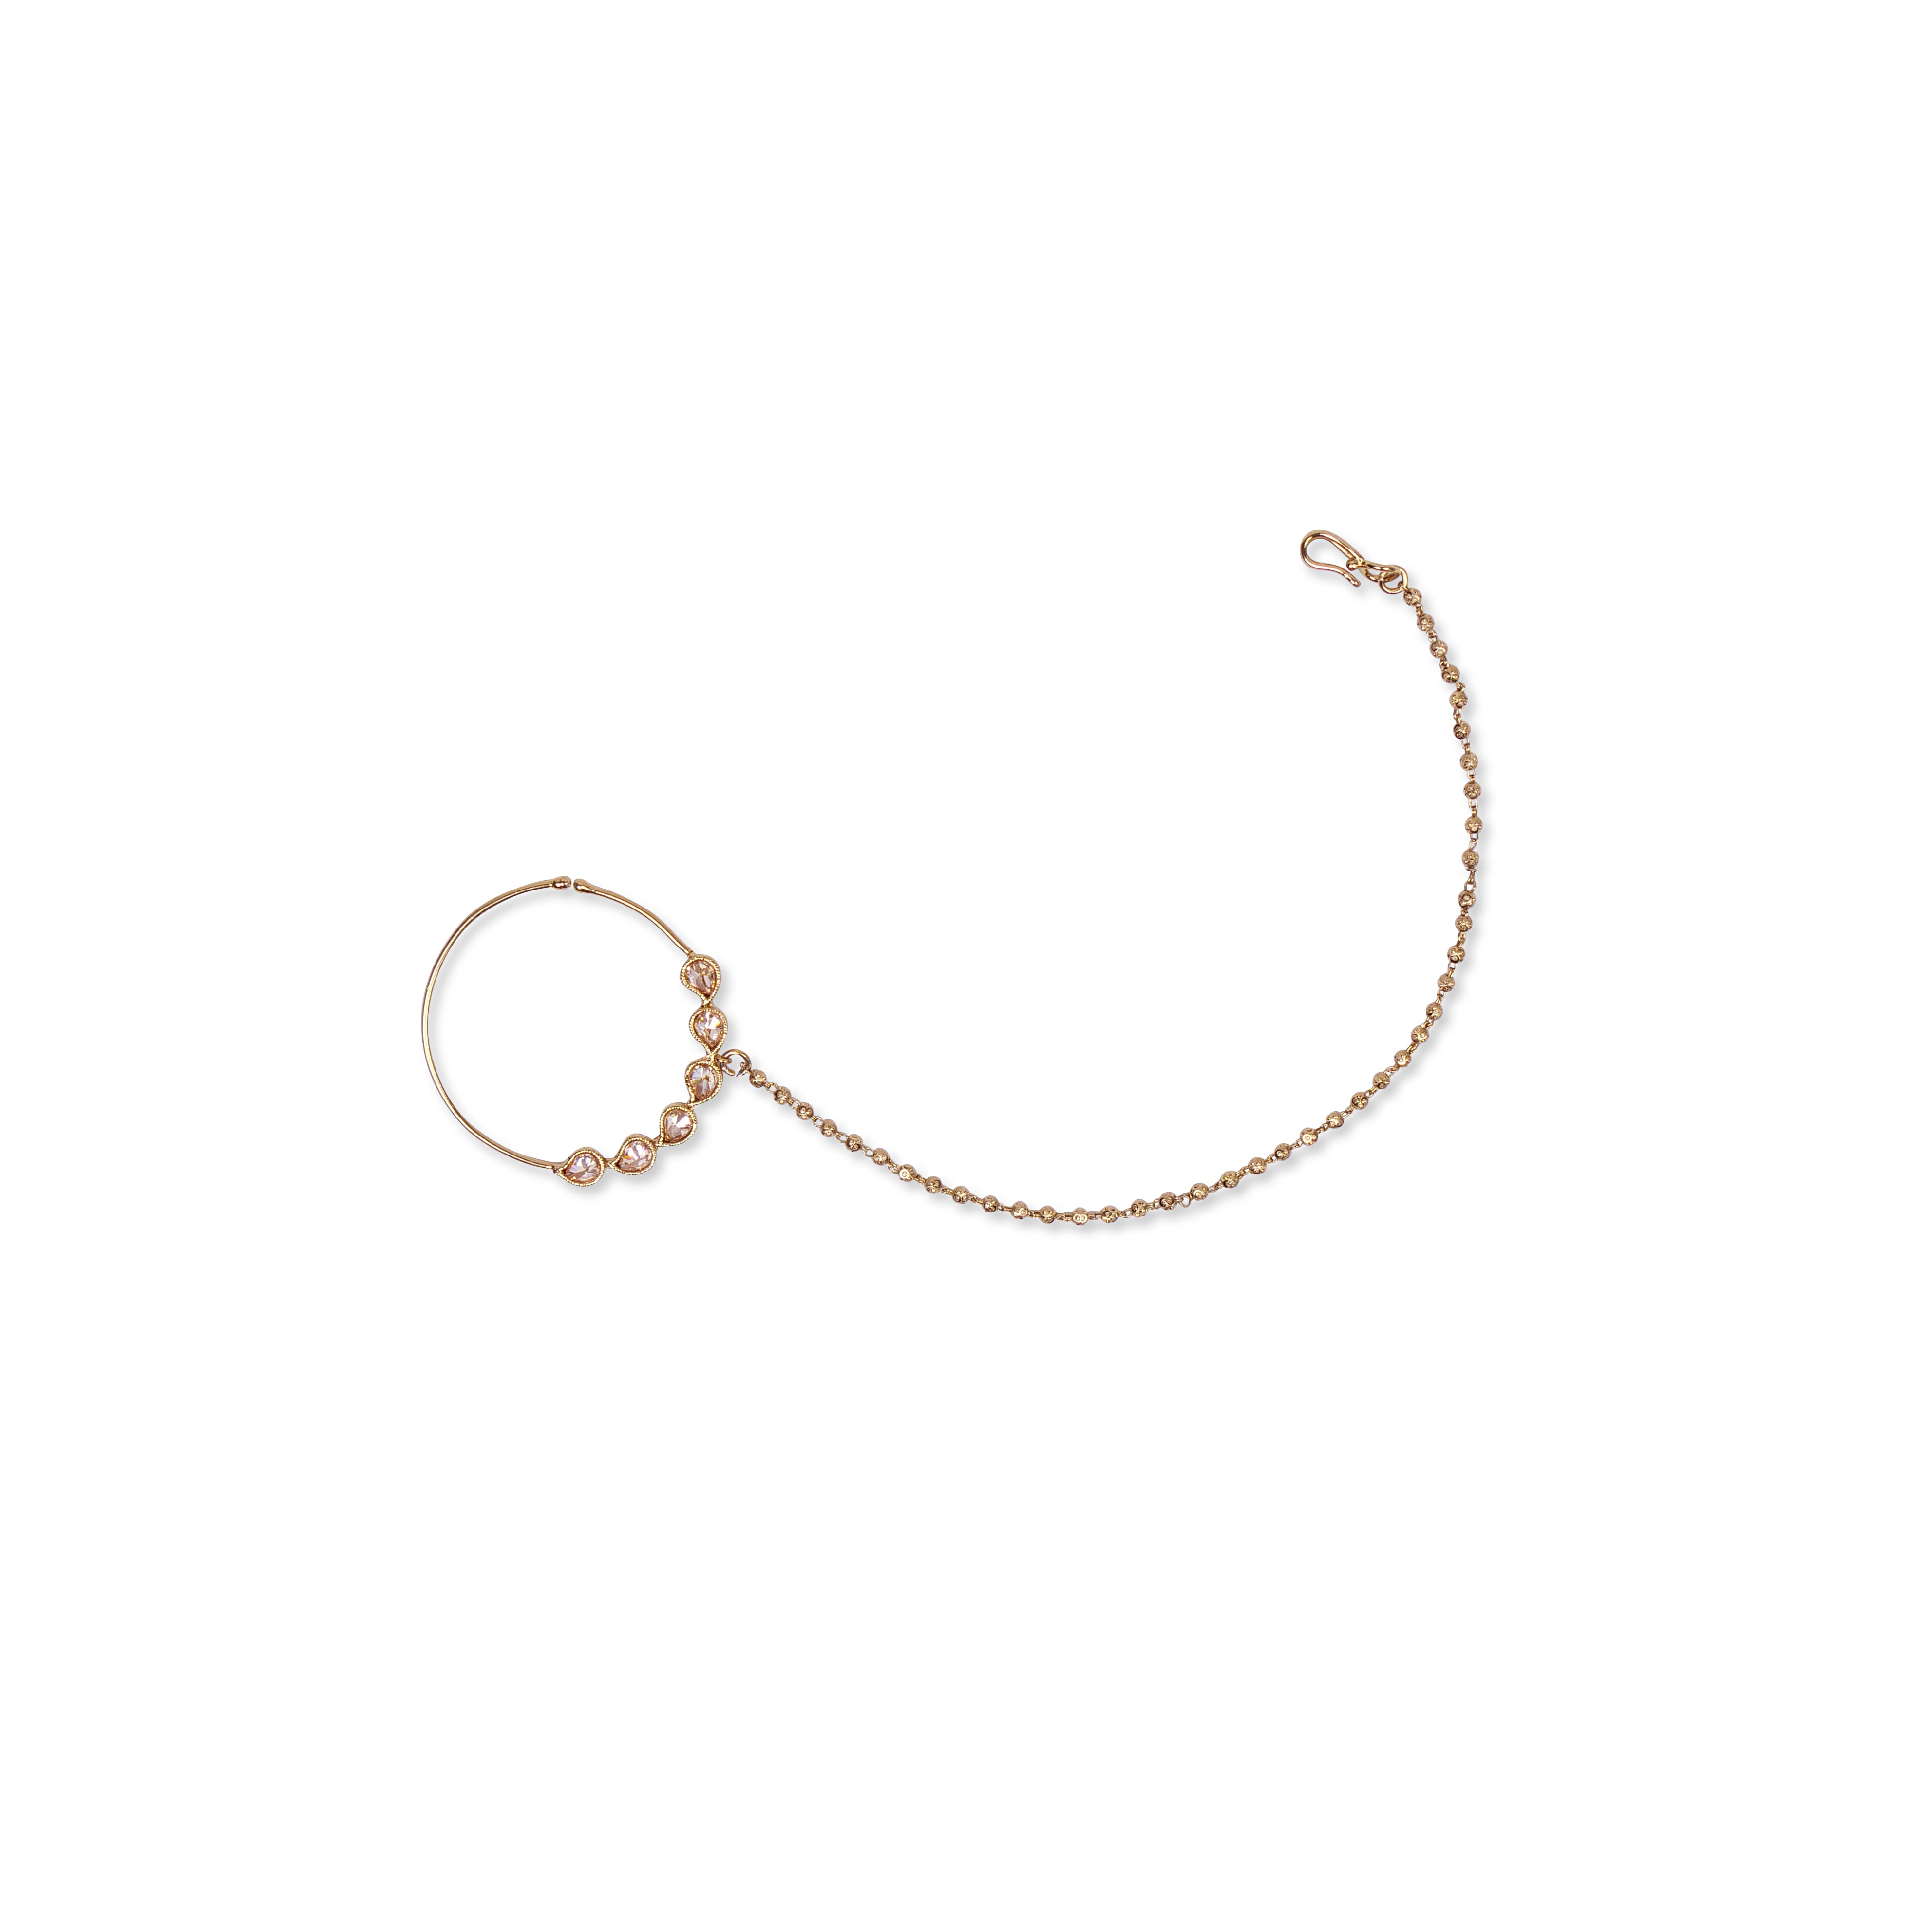 1.5" Teardrop Bridal Nose Ring in Antique Gold